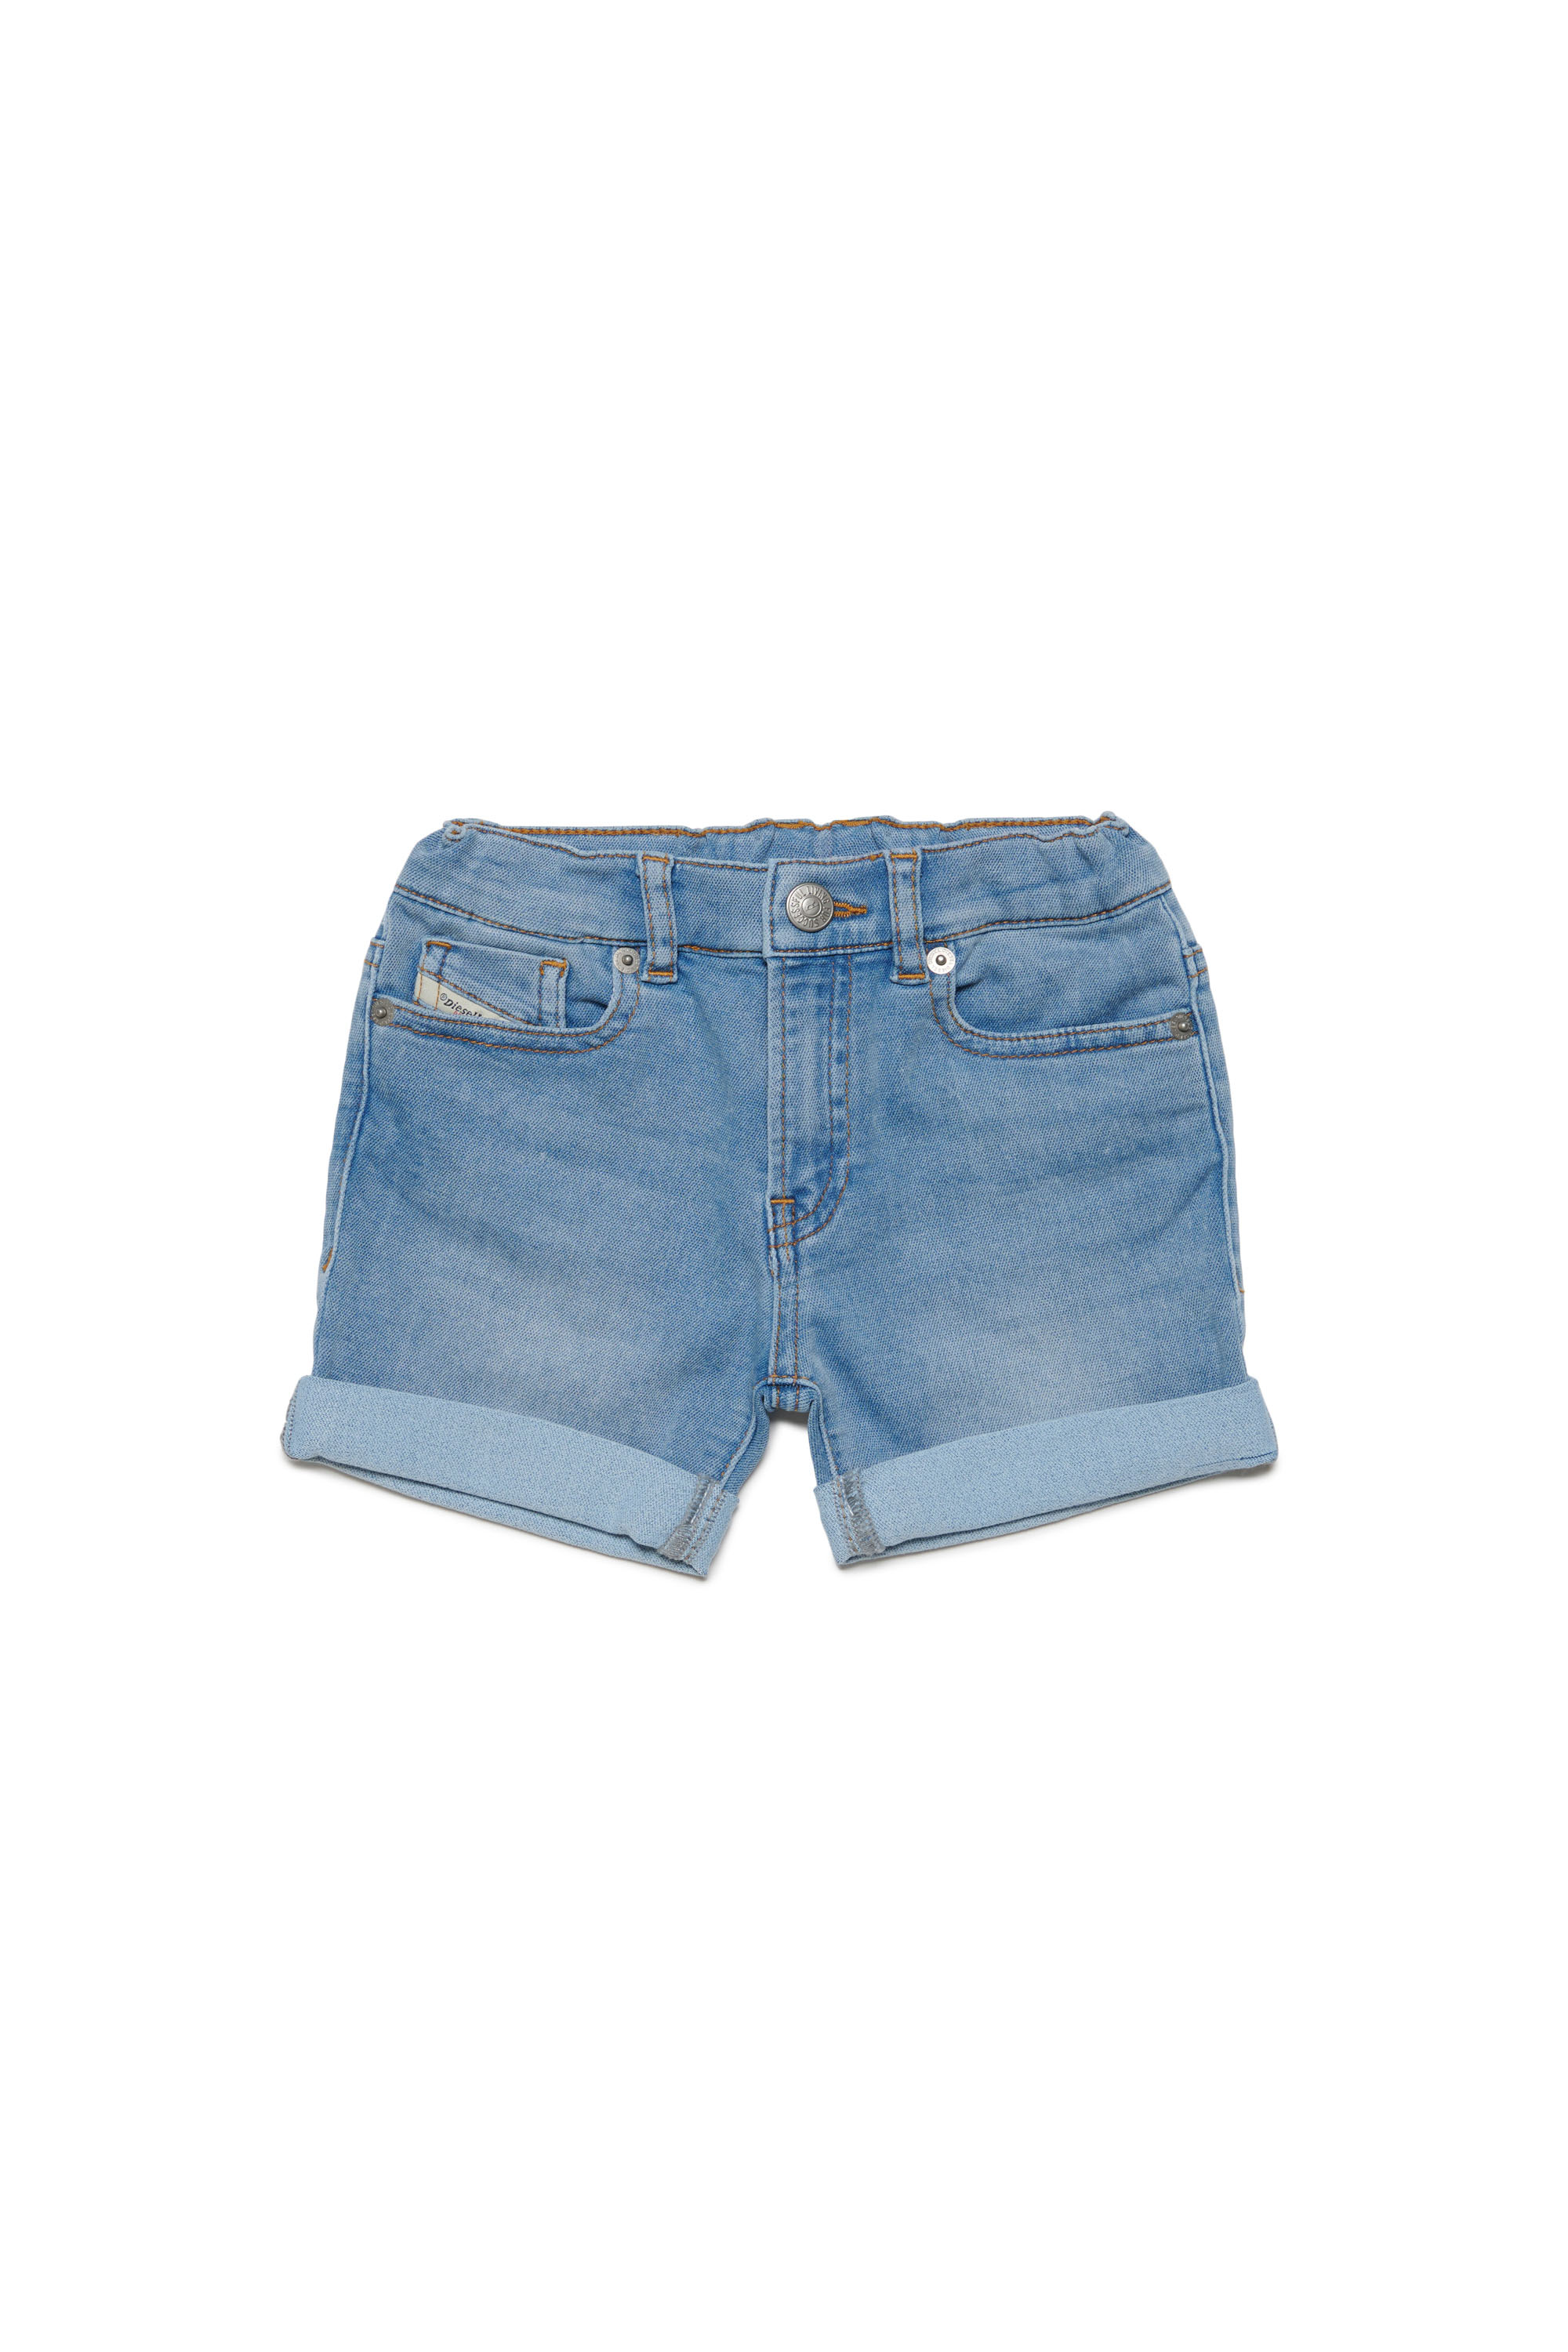 Diesel - Short en tissu Jogg Jeans avec revers - Shorts - Mixte - Bleu